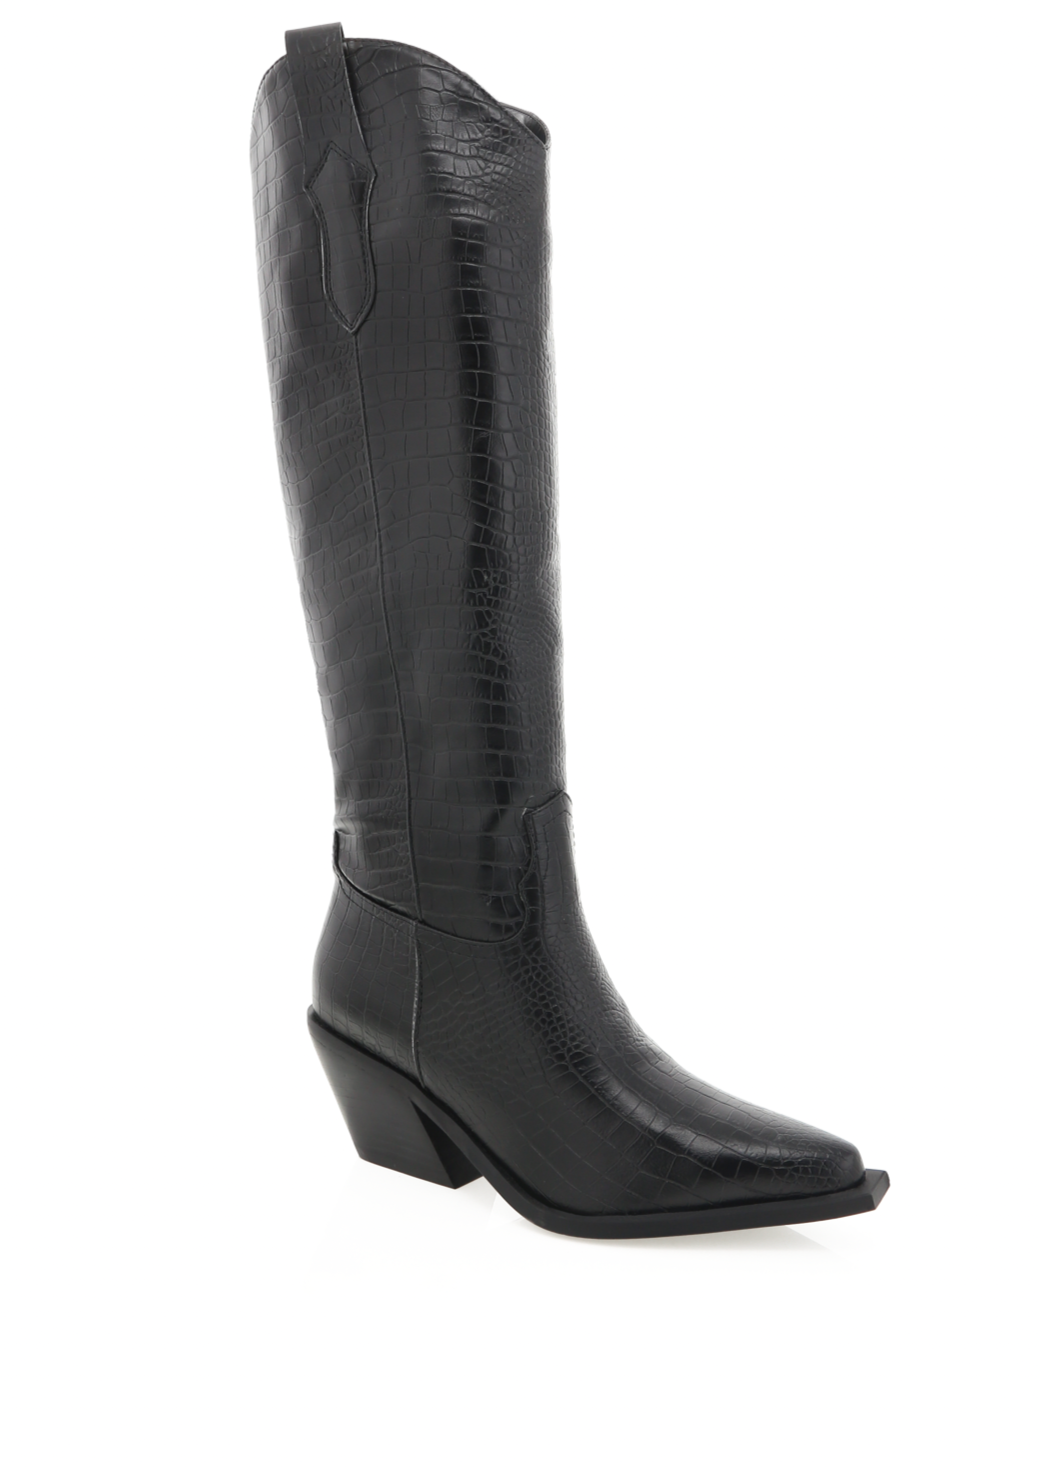 black croc western style boot